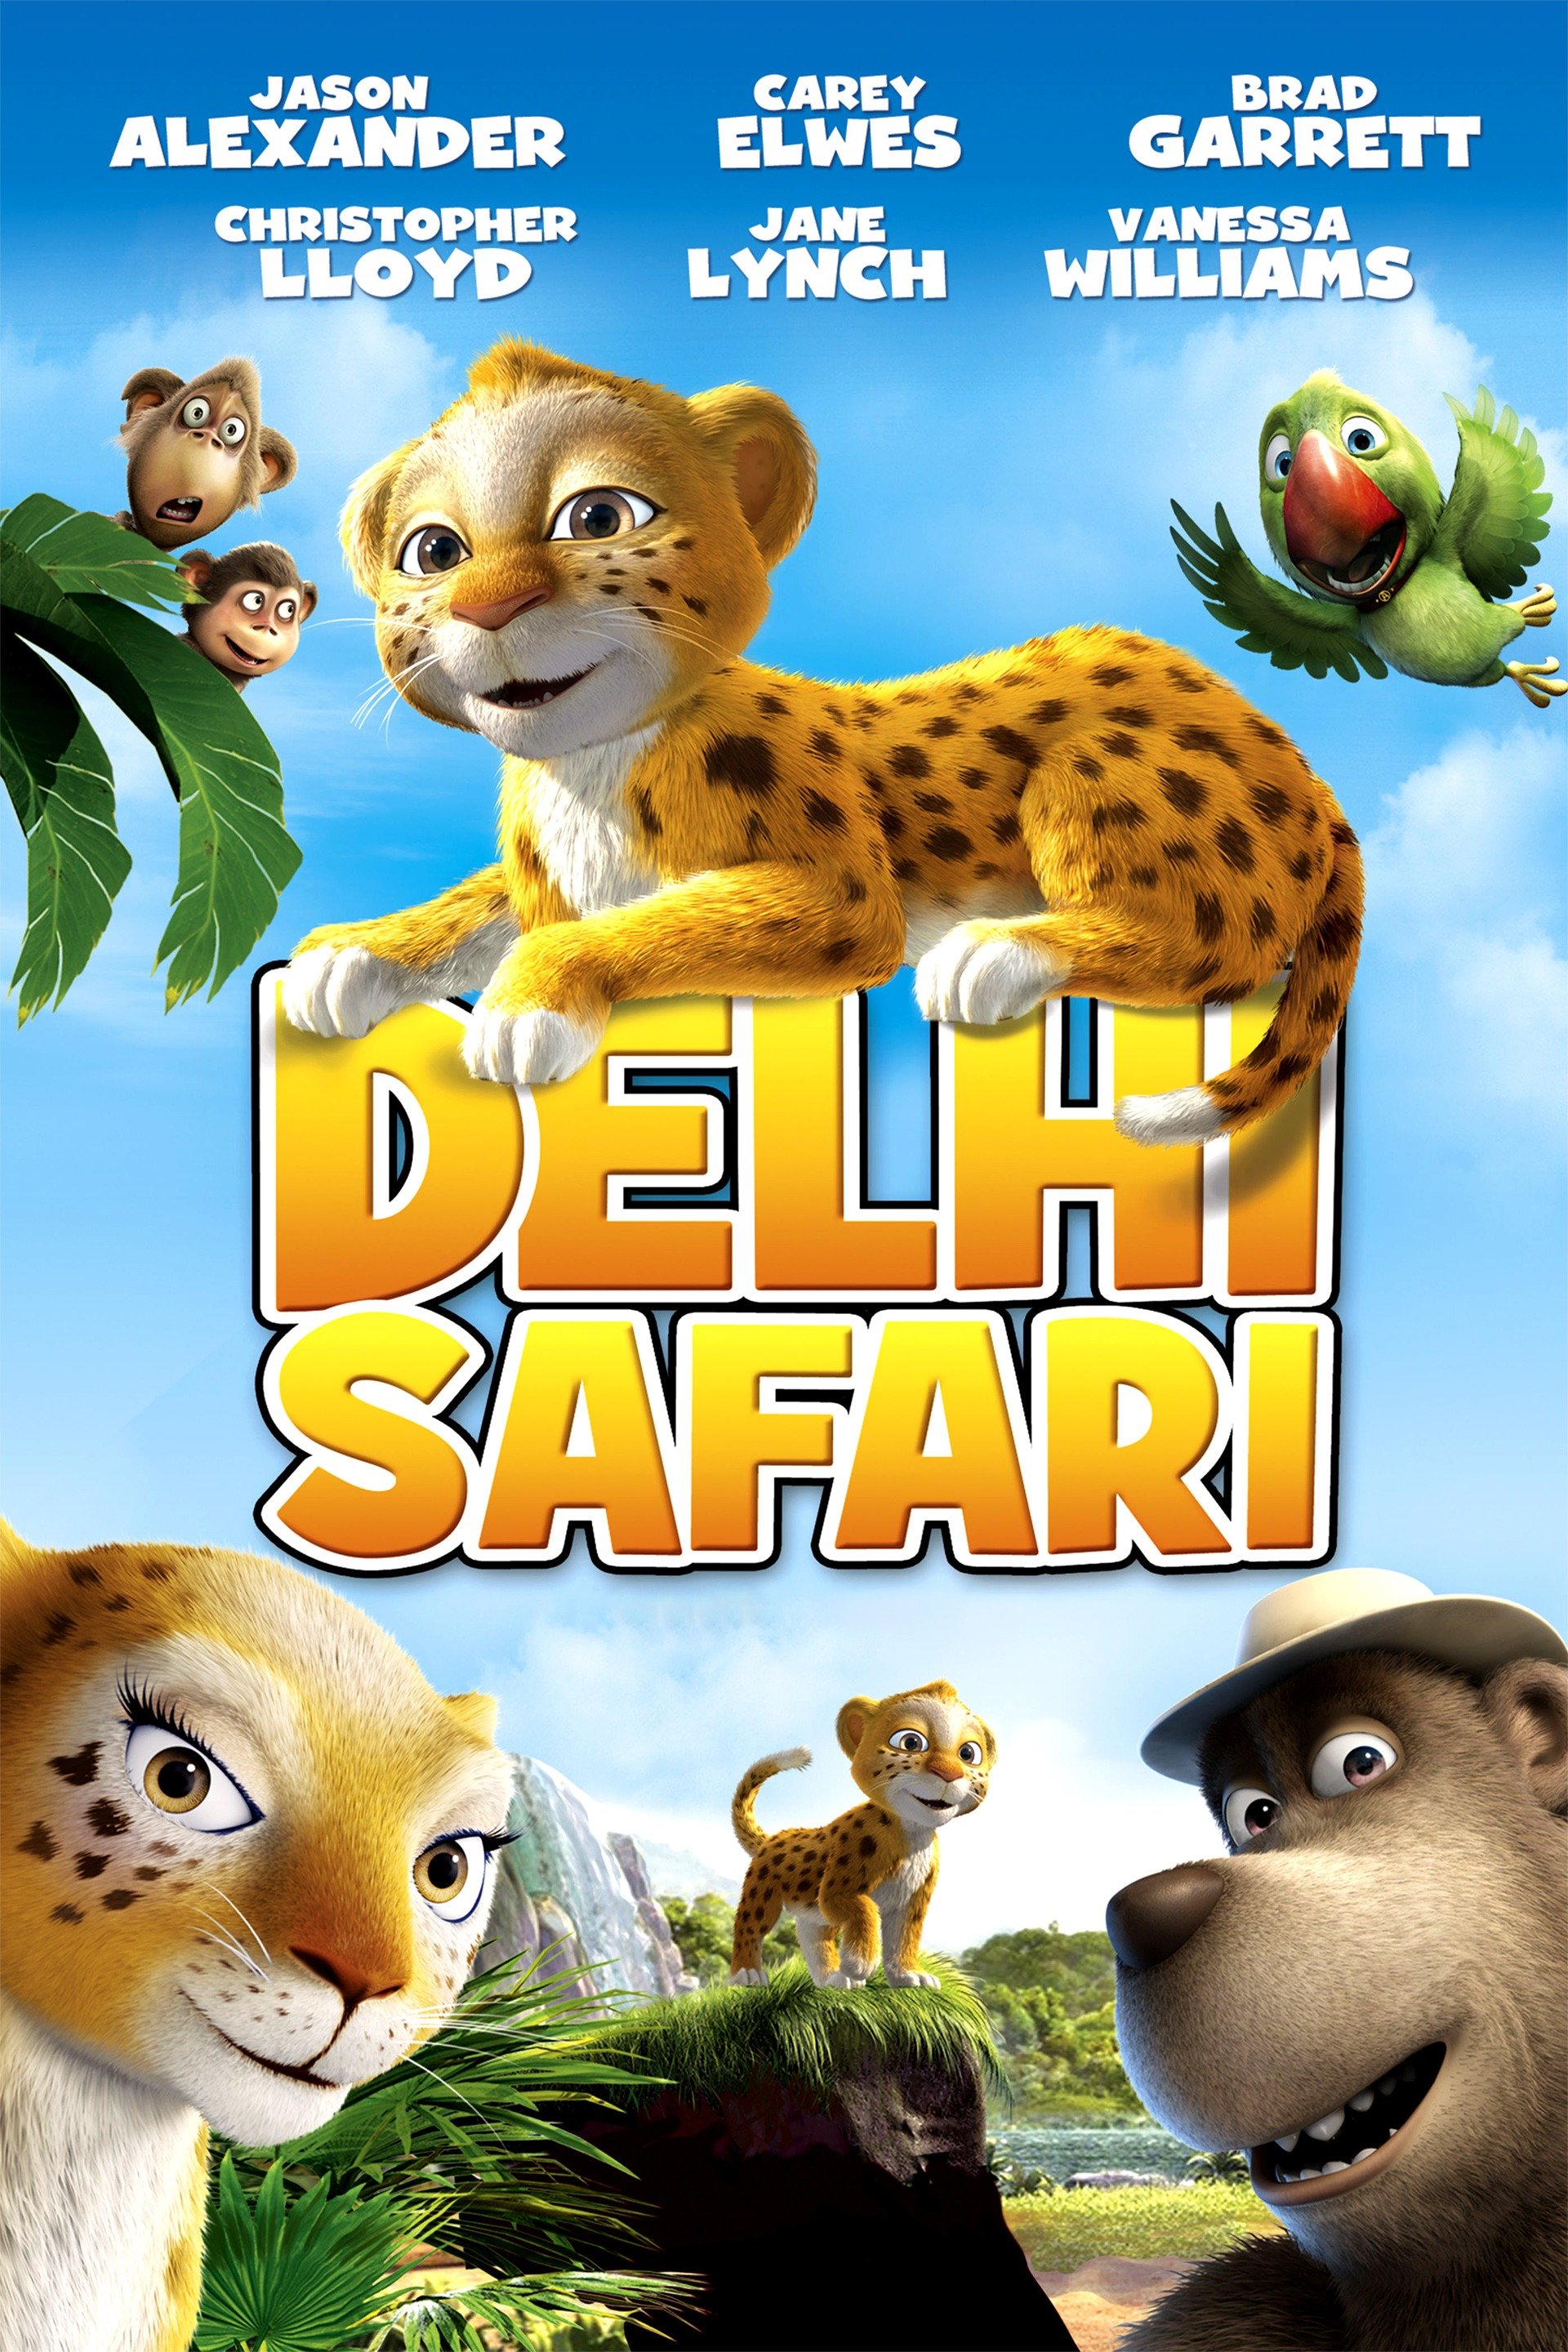 delhi safari is available on